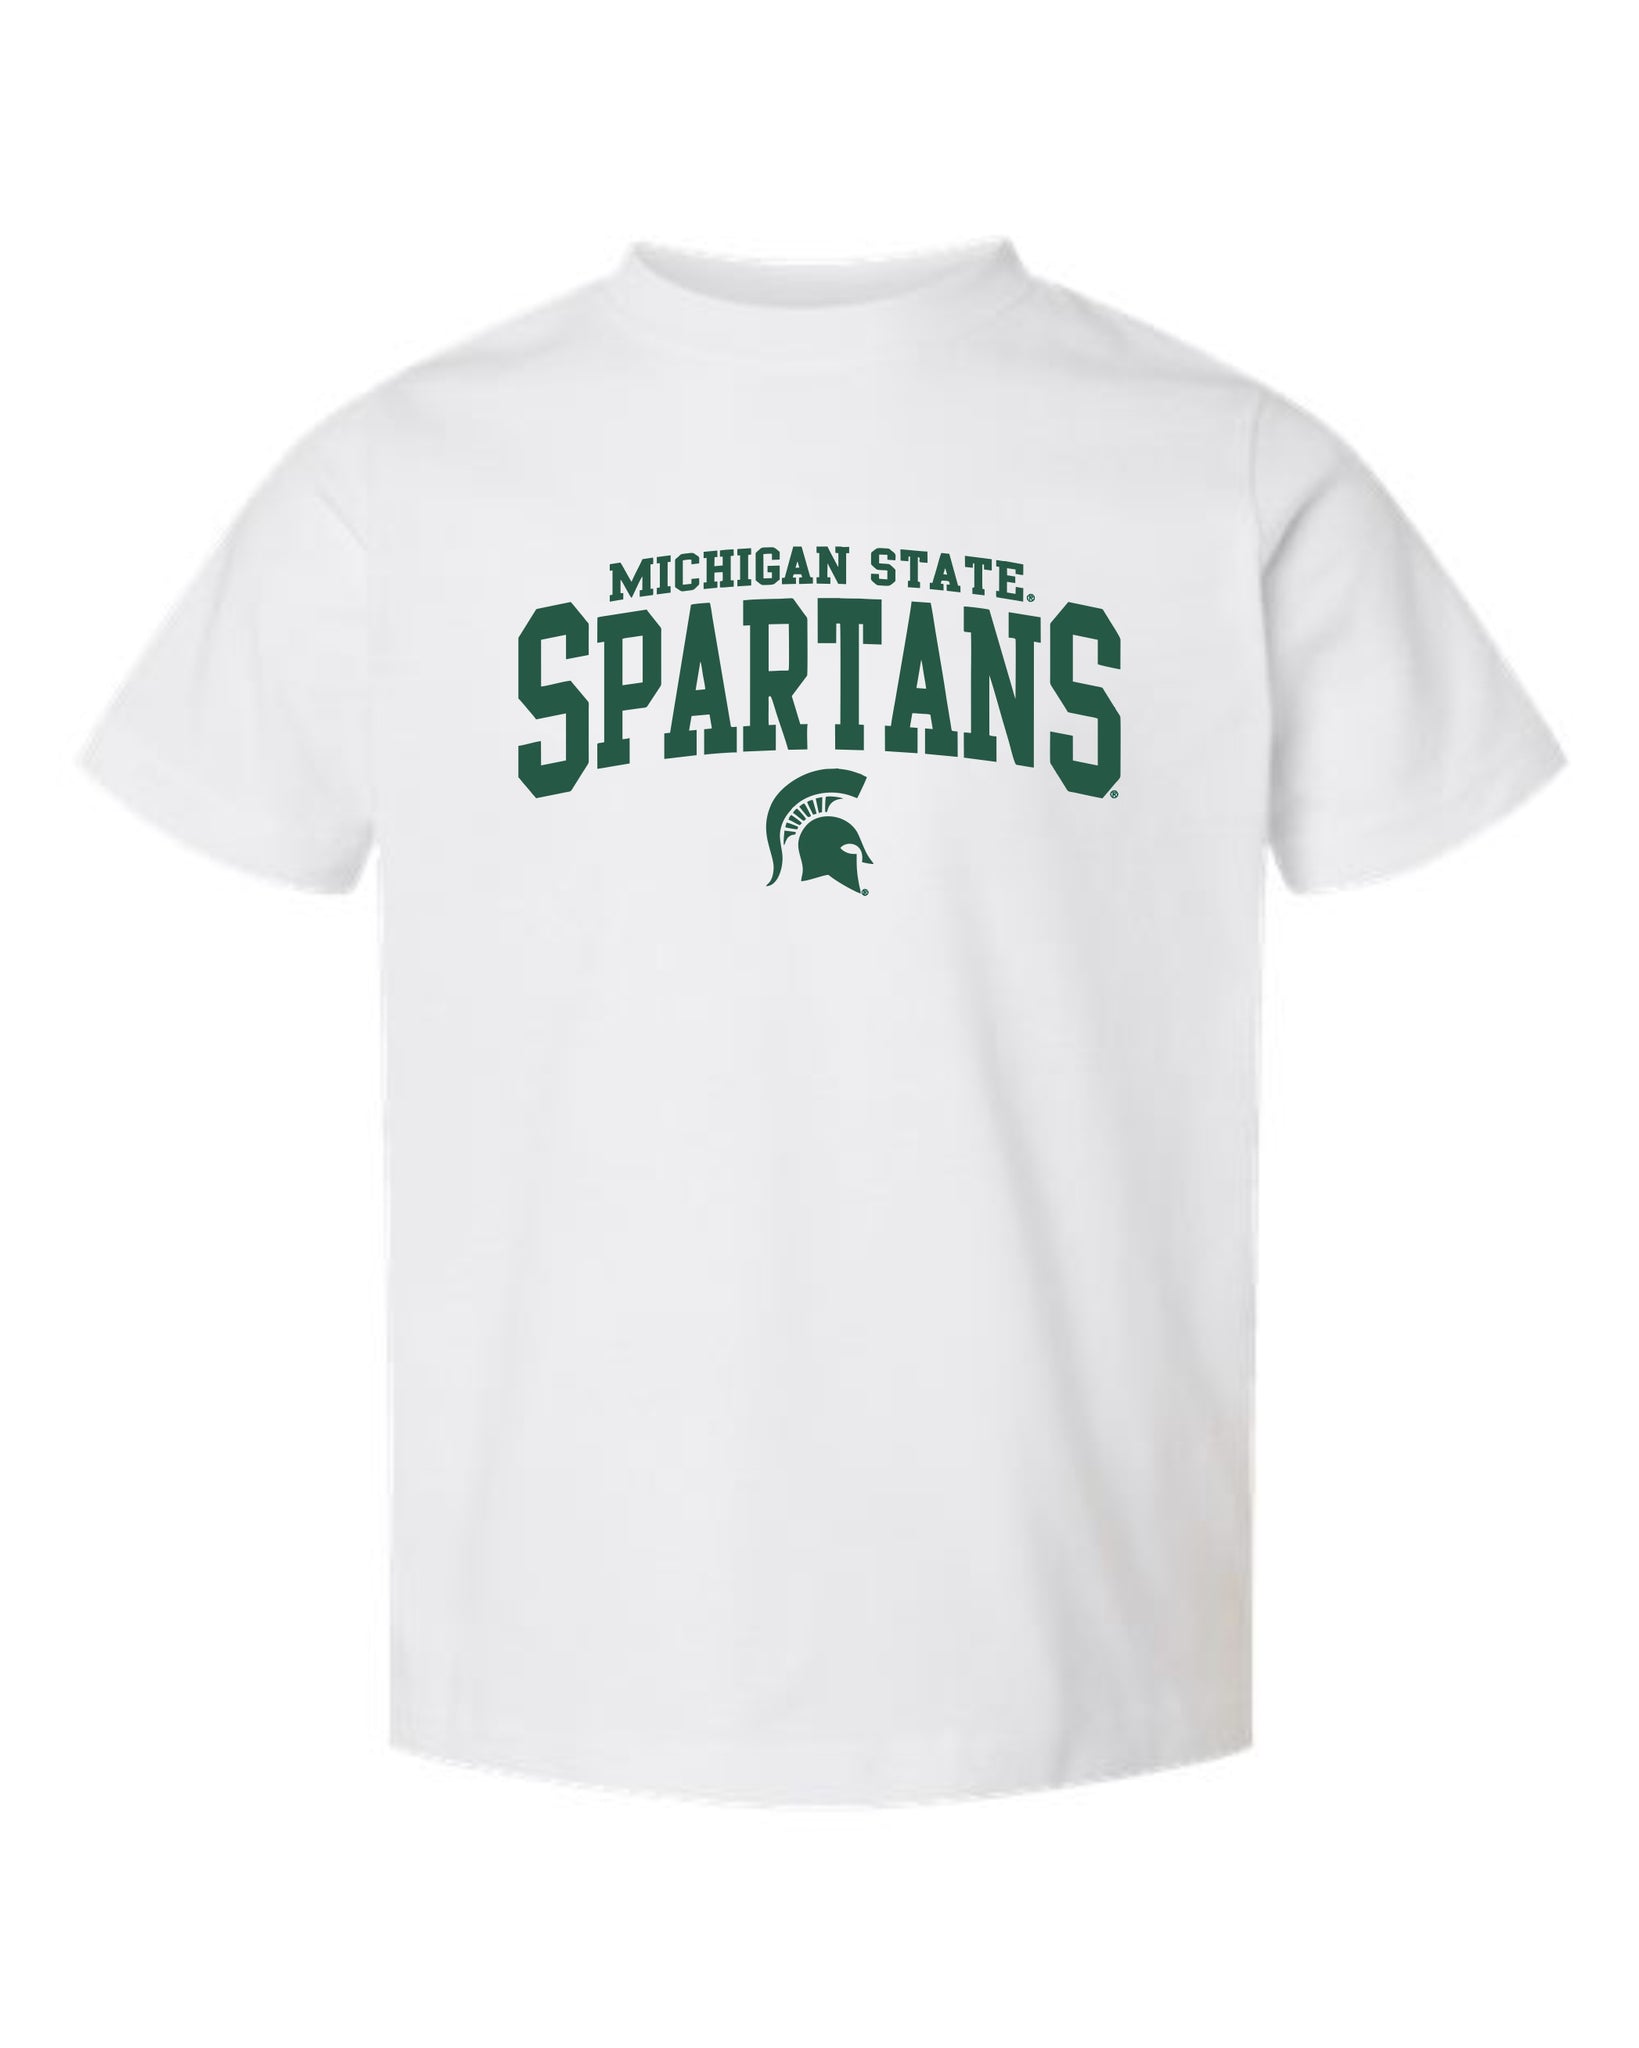 Michigan State Spartans kids jersey